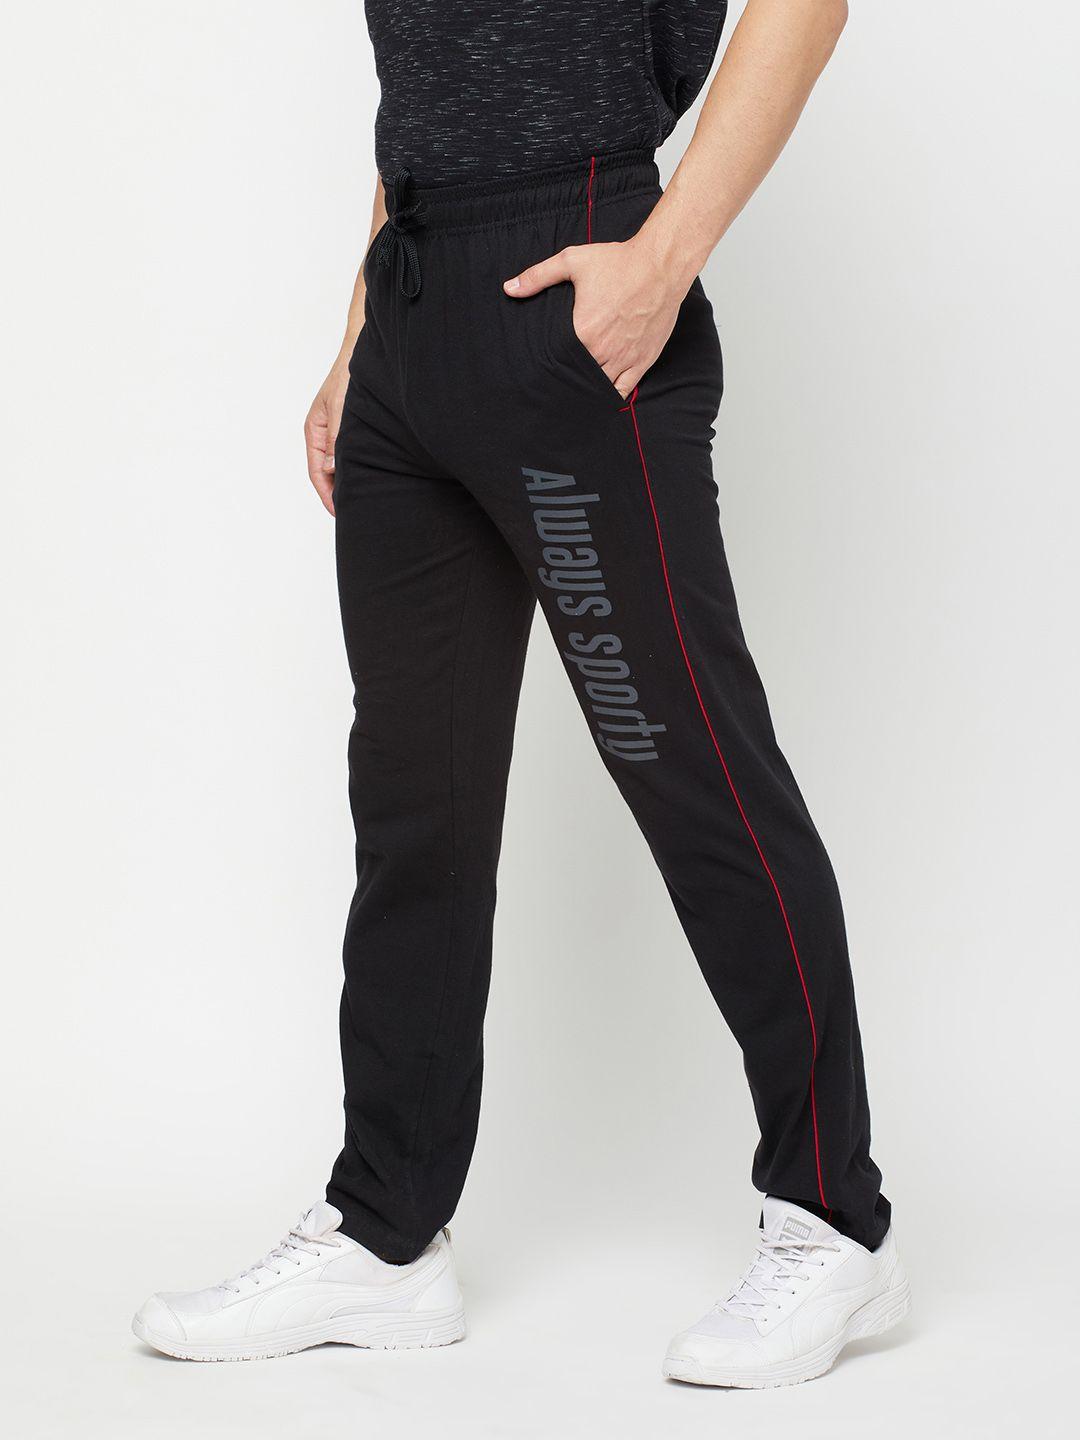 sporto men black  printed cotton slim-fit gym track pants